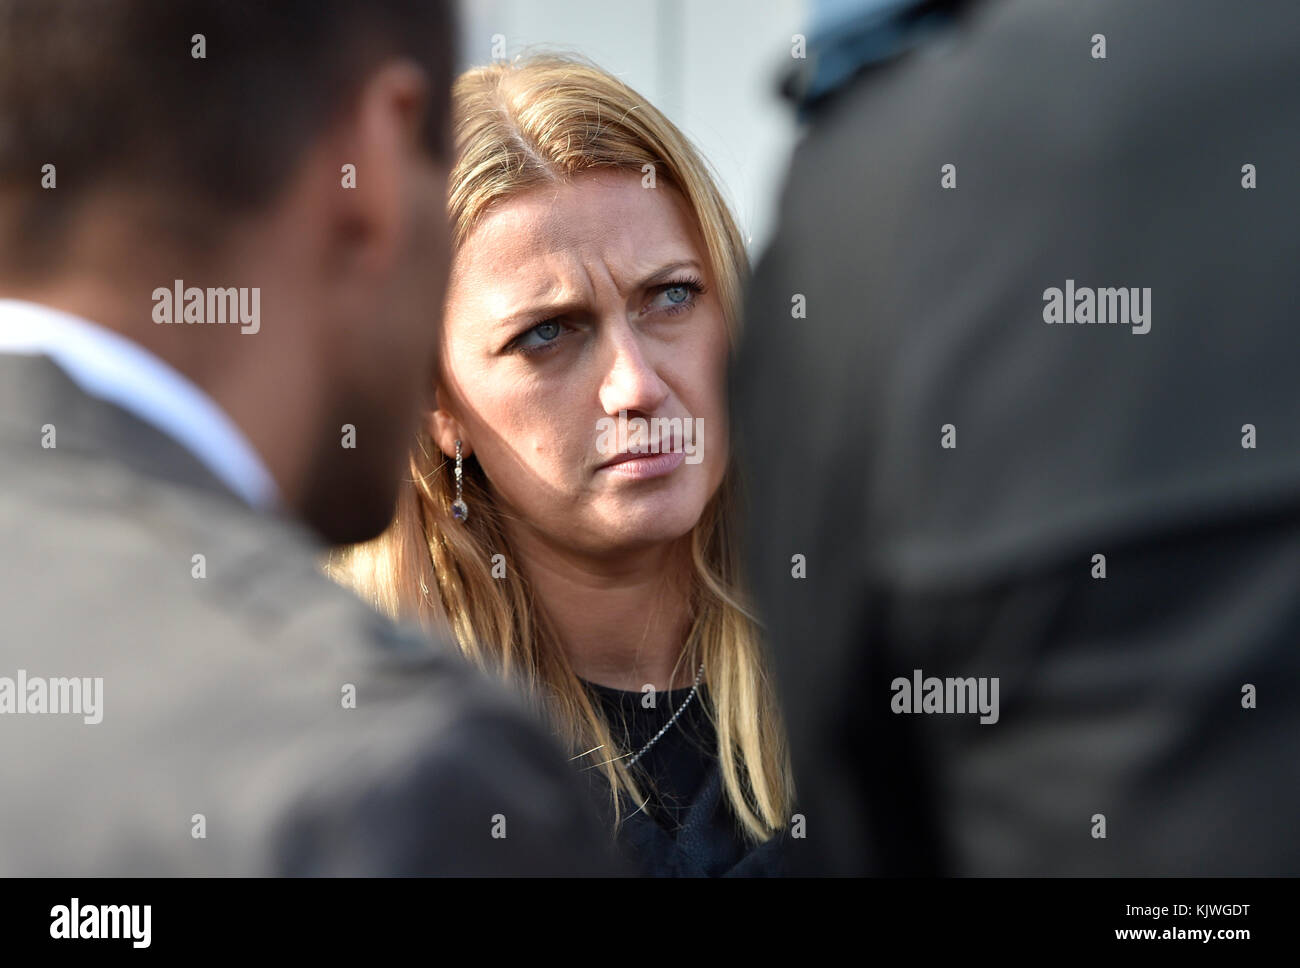 Brno, Czech Republic. 27th Nov, 2017. Tennis player Petra Kvitova attends  funeral of former Czech tennis player Jana Novotna, Wimbledon champion, who  died after a serious illness on Sunday, November 19, at